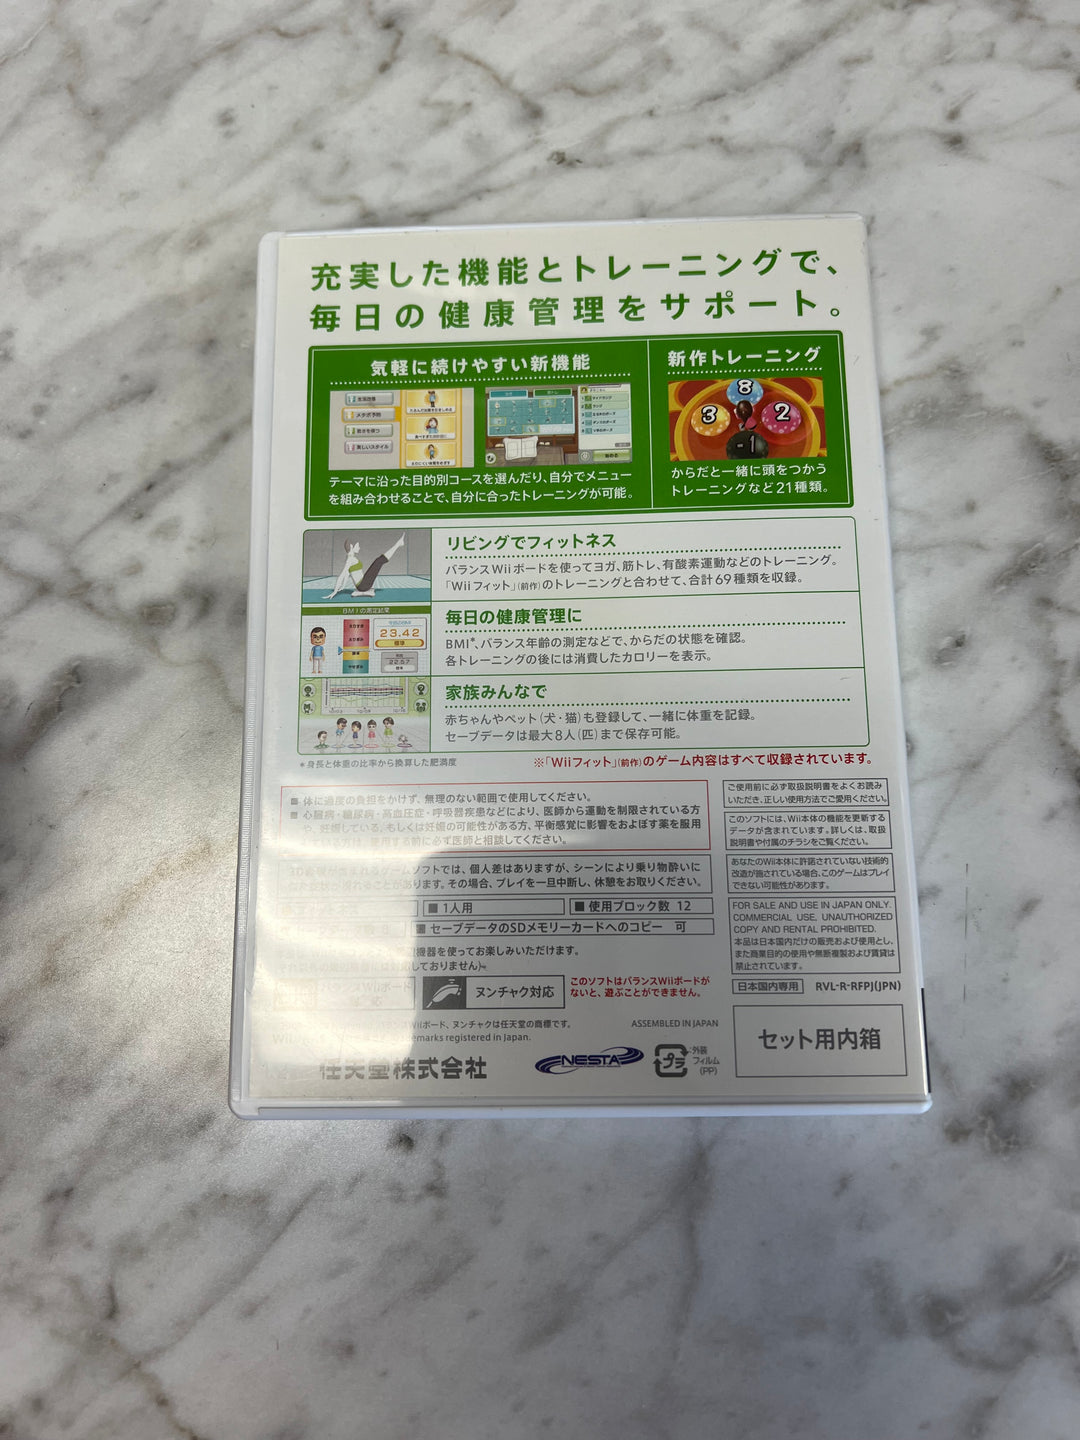 Wii Fit PLUS Nintendo Wii JAPAN JAPANESE JP IMPORT USA SELLER  D70124